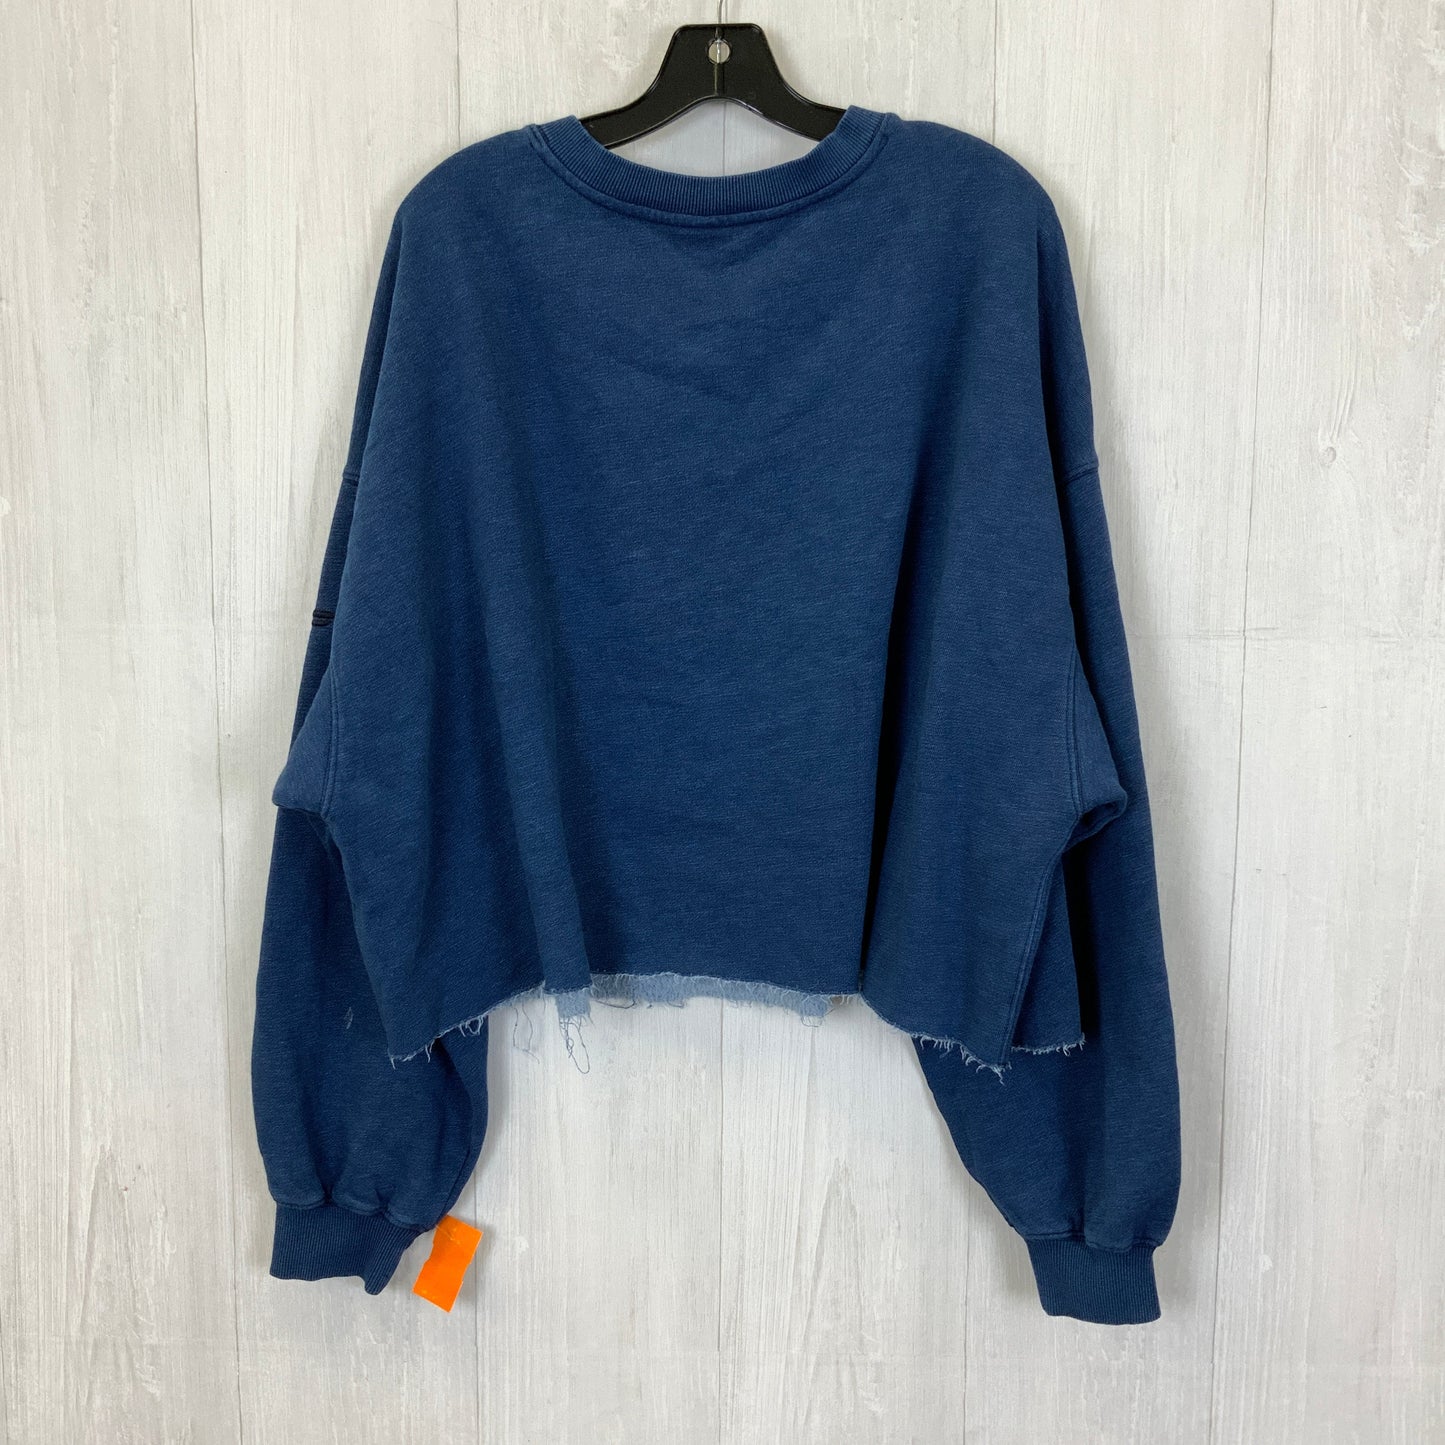 Sweatshirt Crewneck By Fabletics  Size: 4x